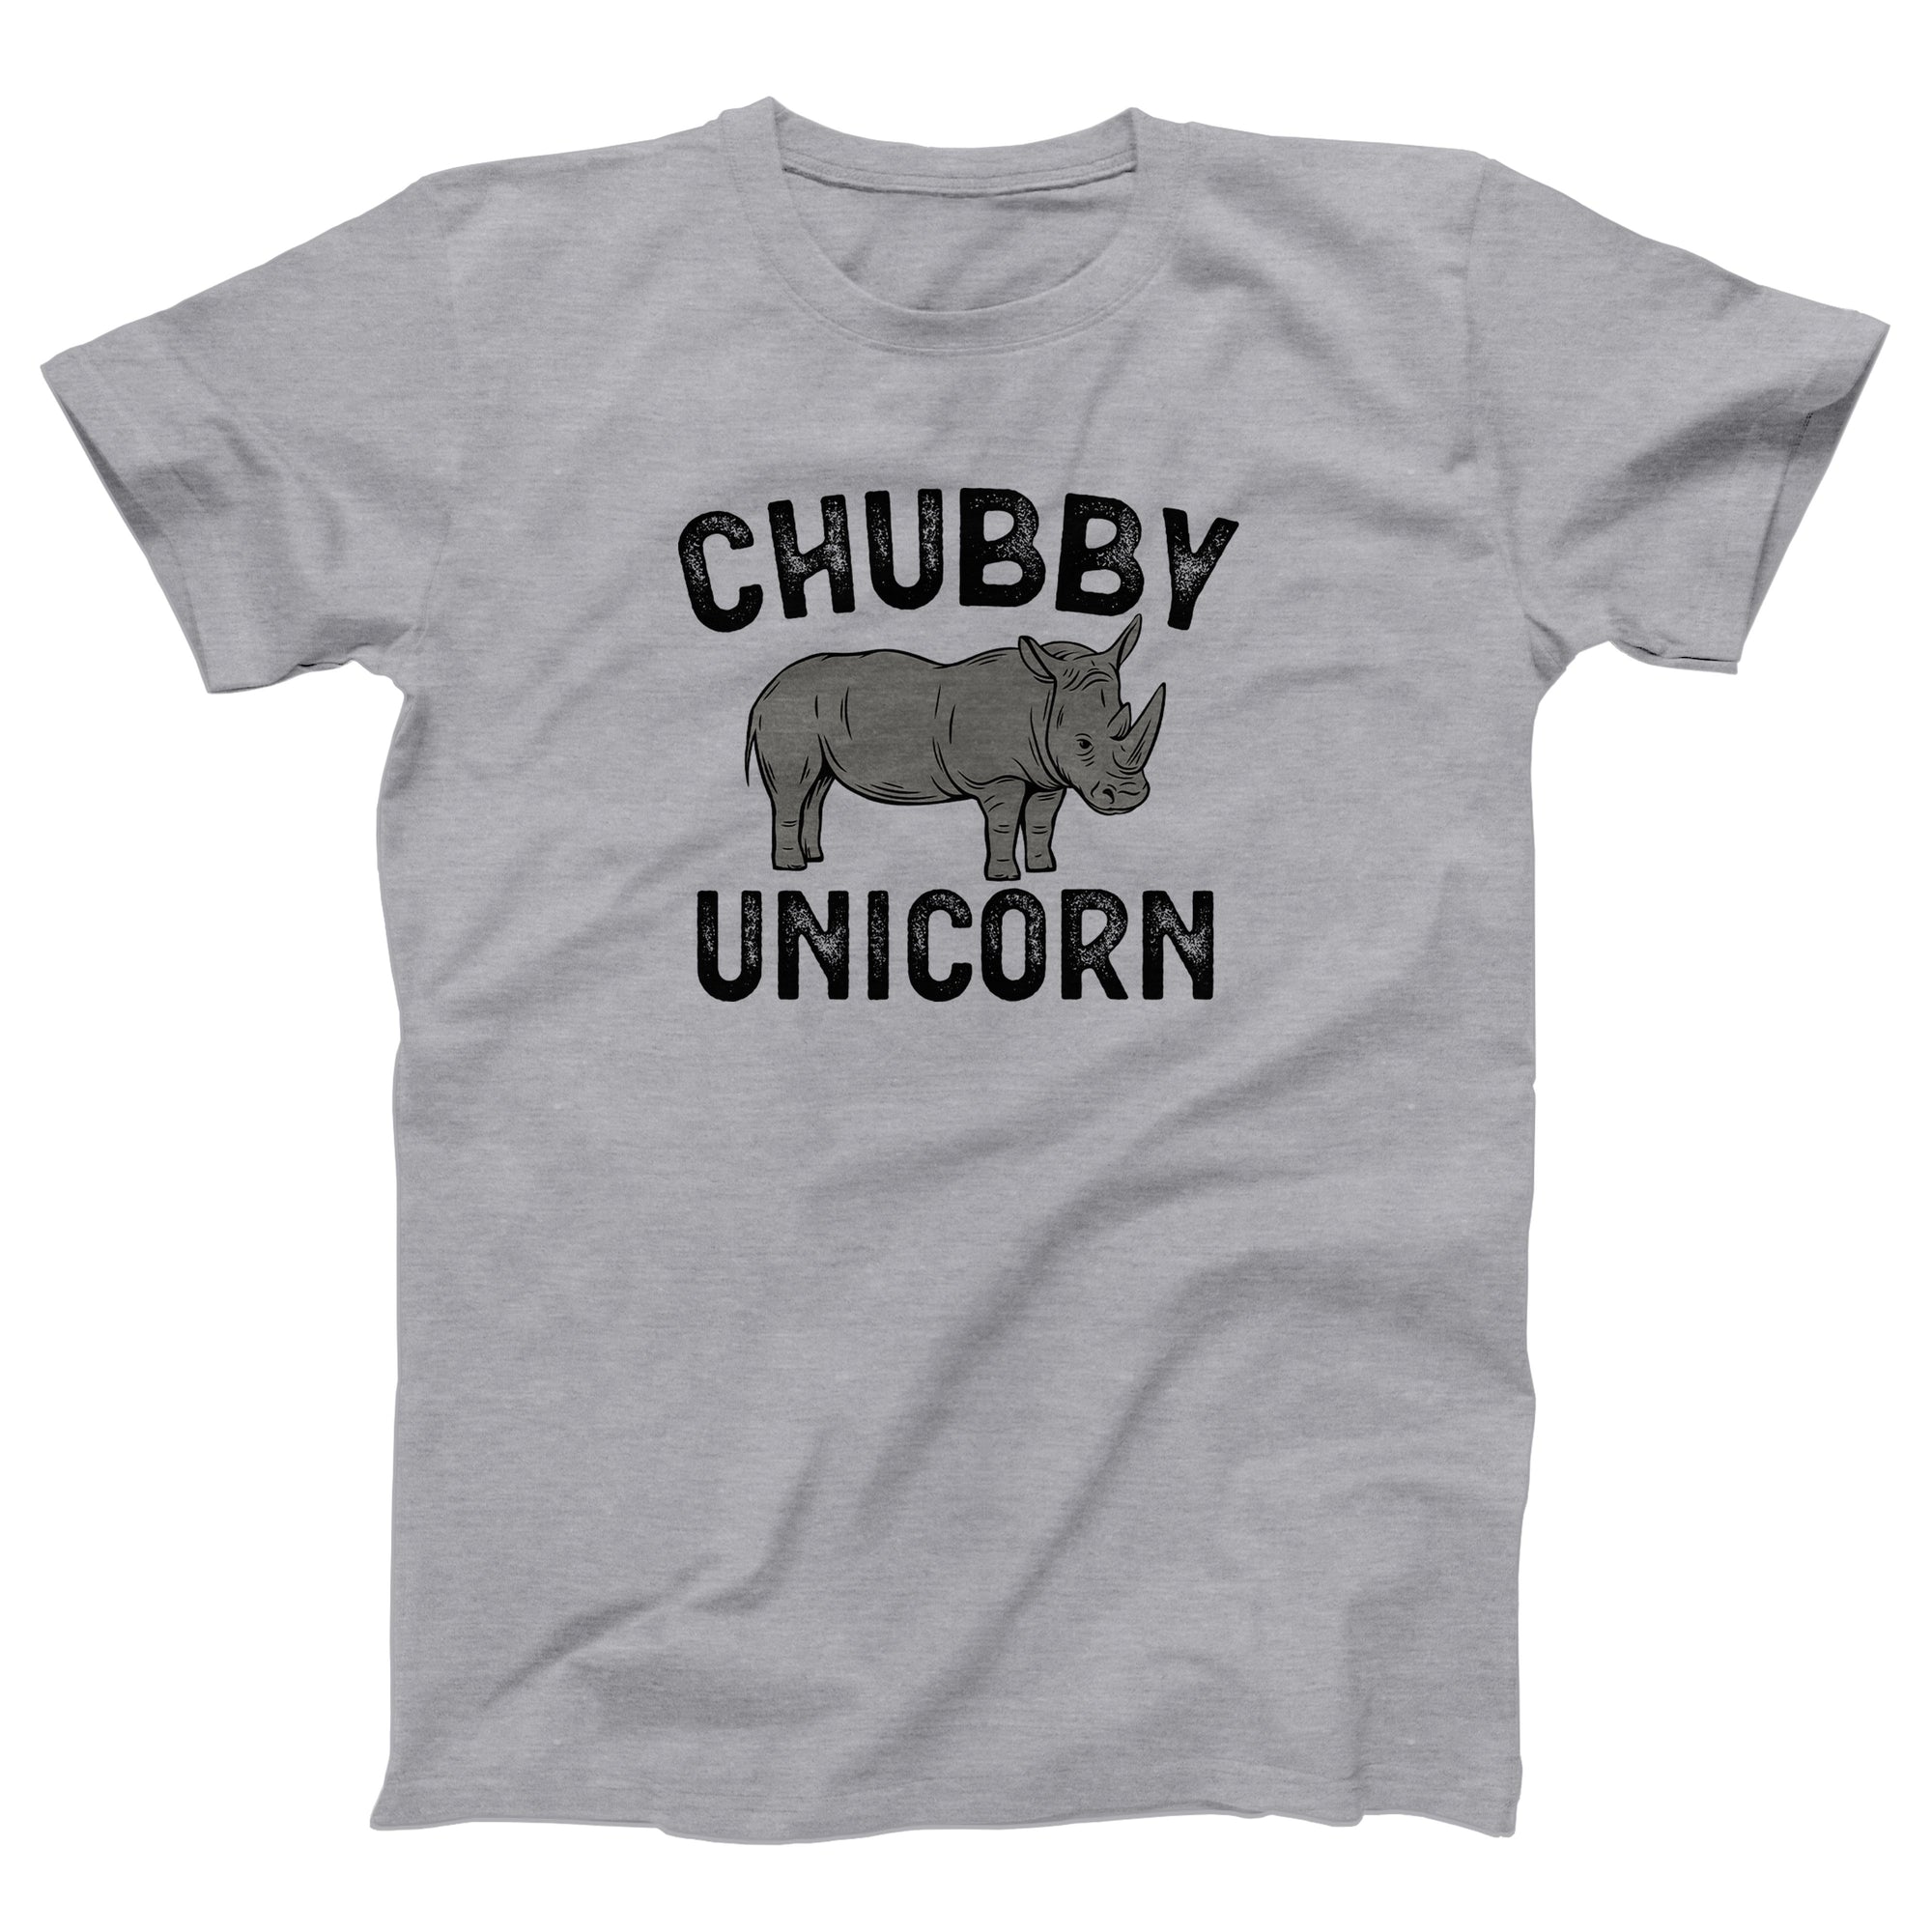 Chubby Unicorn Adult Unisex T-Shirt - anishphilip